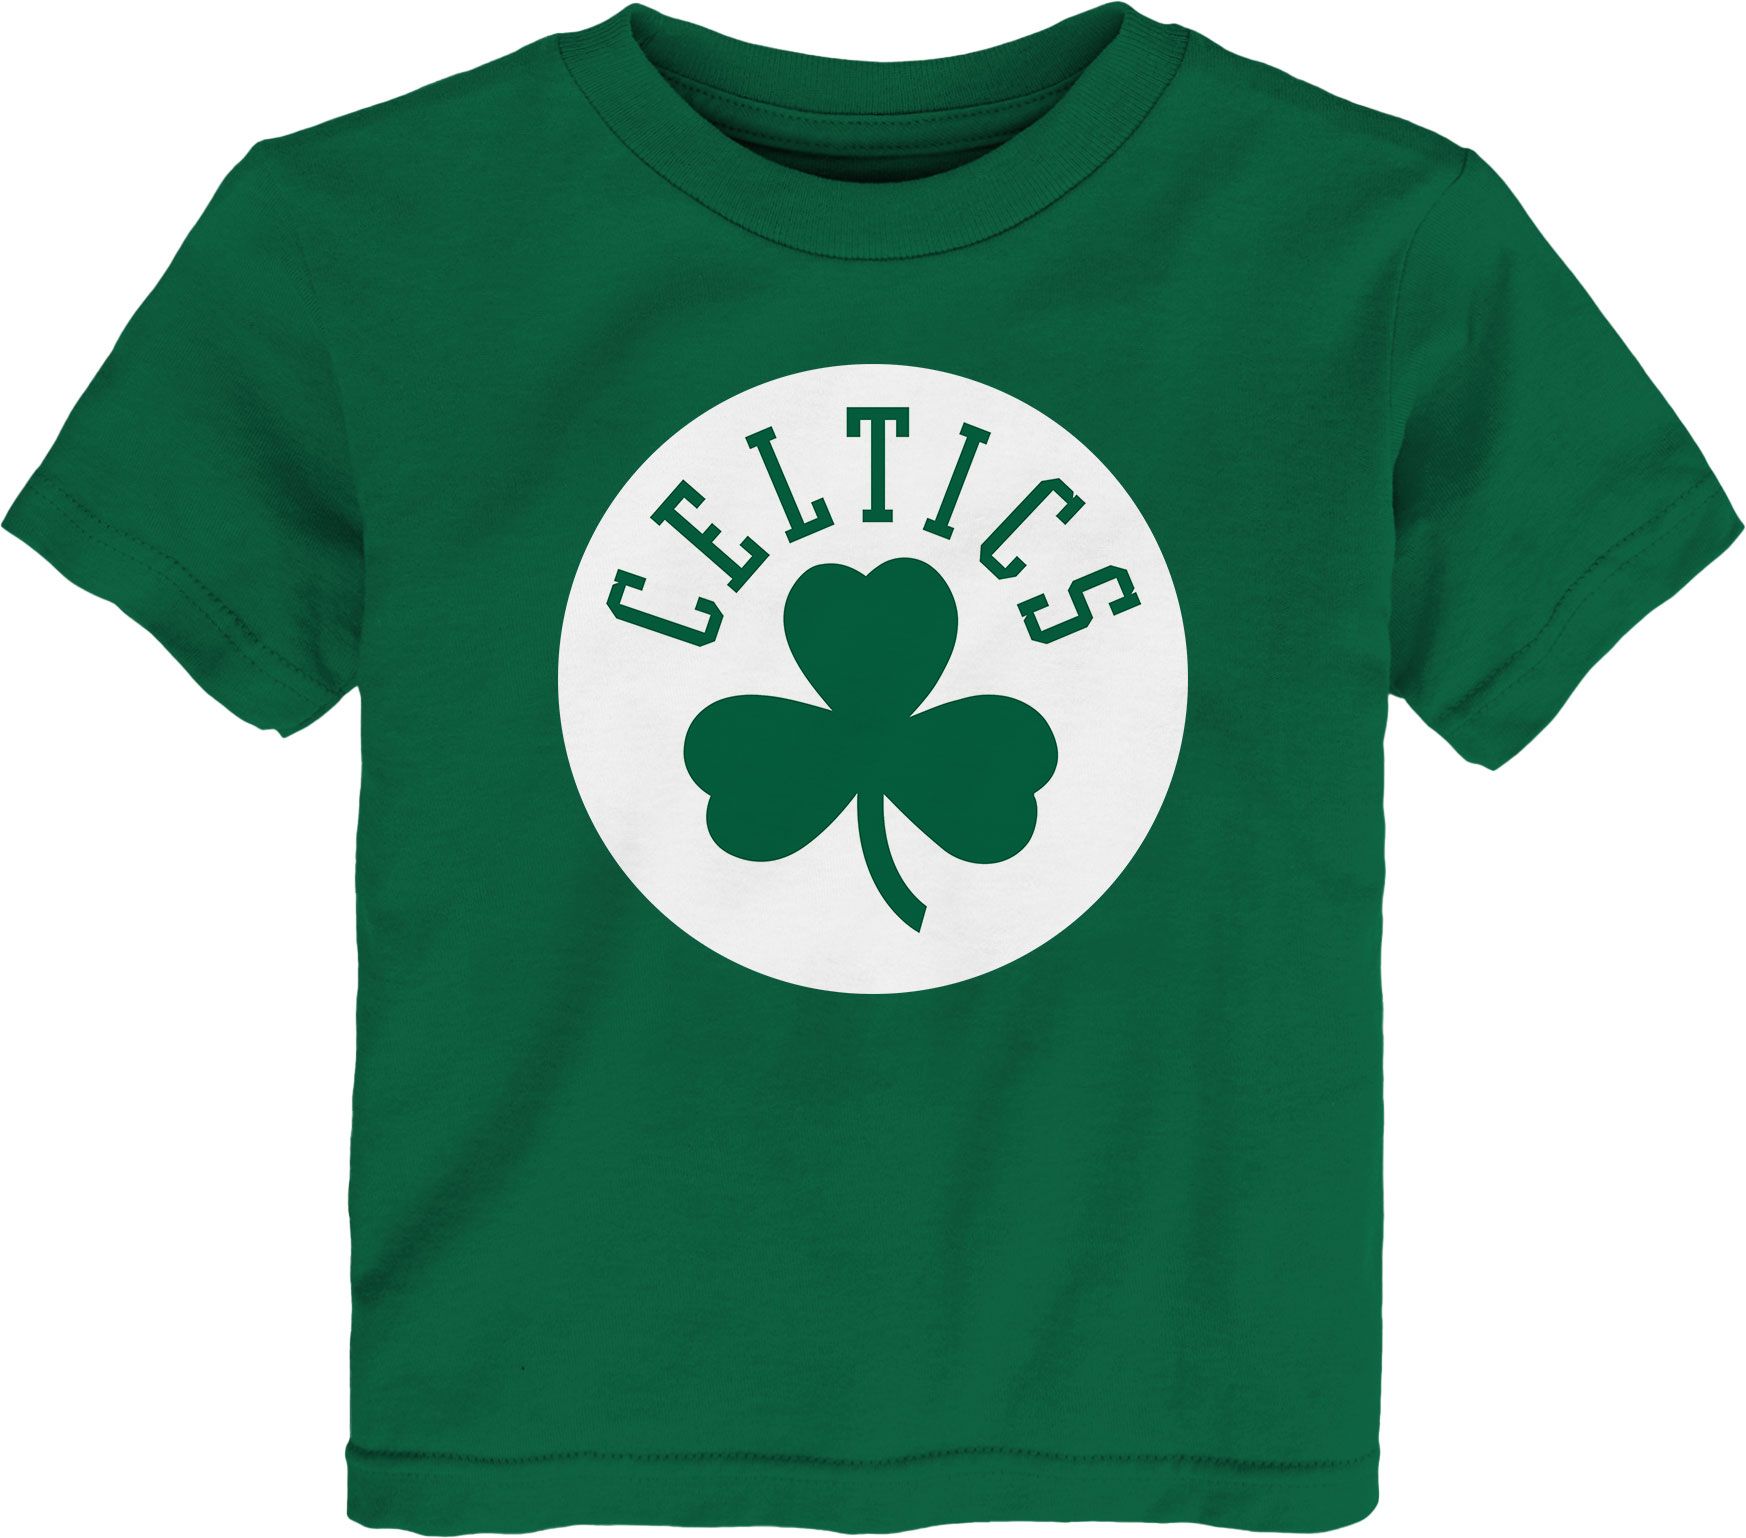 Outerstuff Ensemble Nba Boston Celtics T-Shirt Green